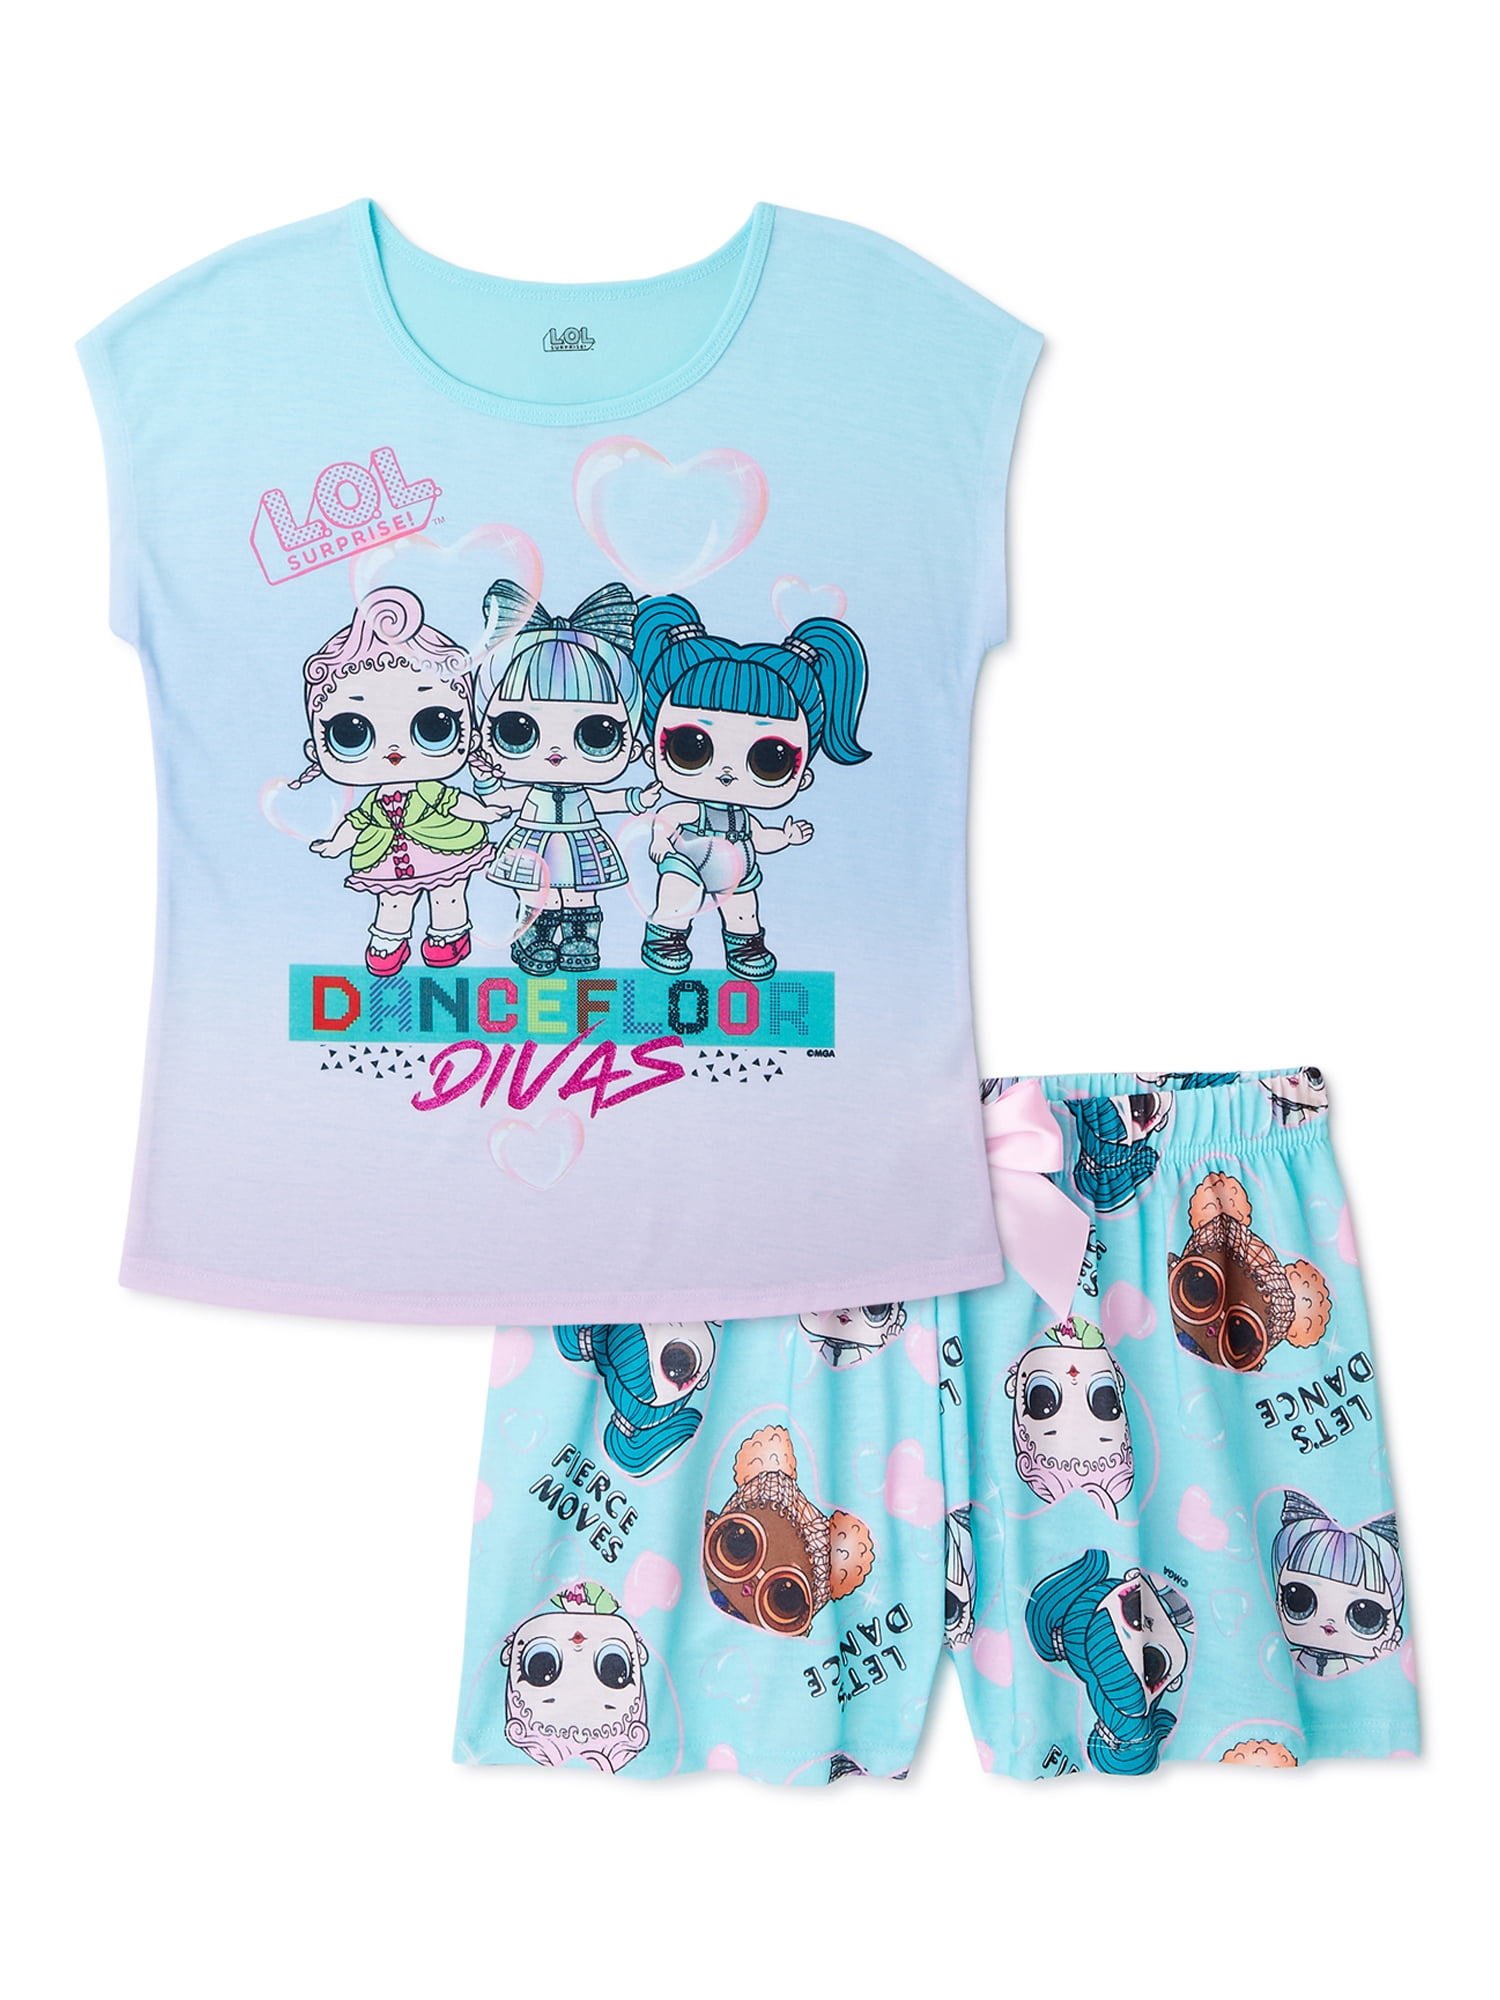 Dolls Pyjamas for Girls Soft Cotton PJ Set Confetti Pop Lil Sisters Pyjama Sets L.O.L Surprise